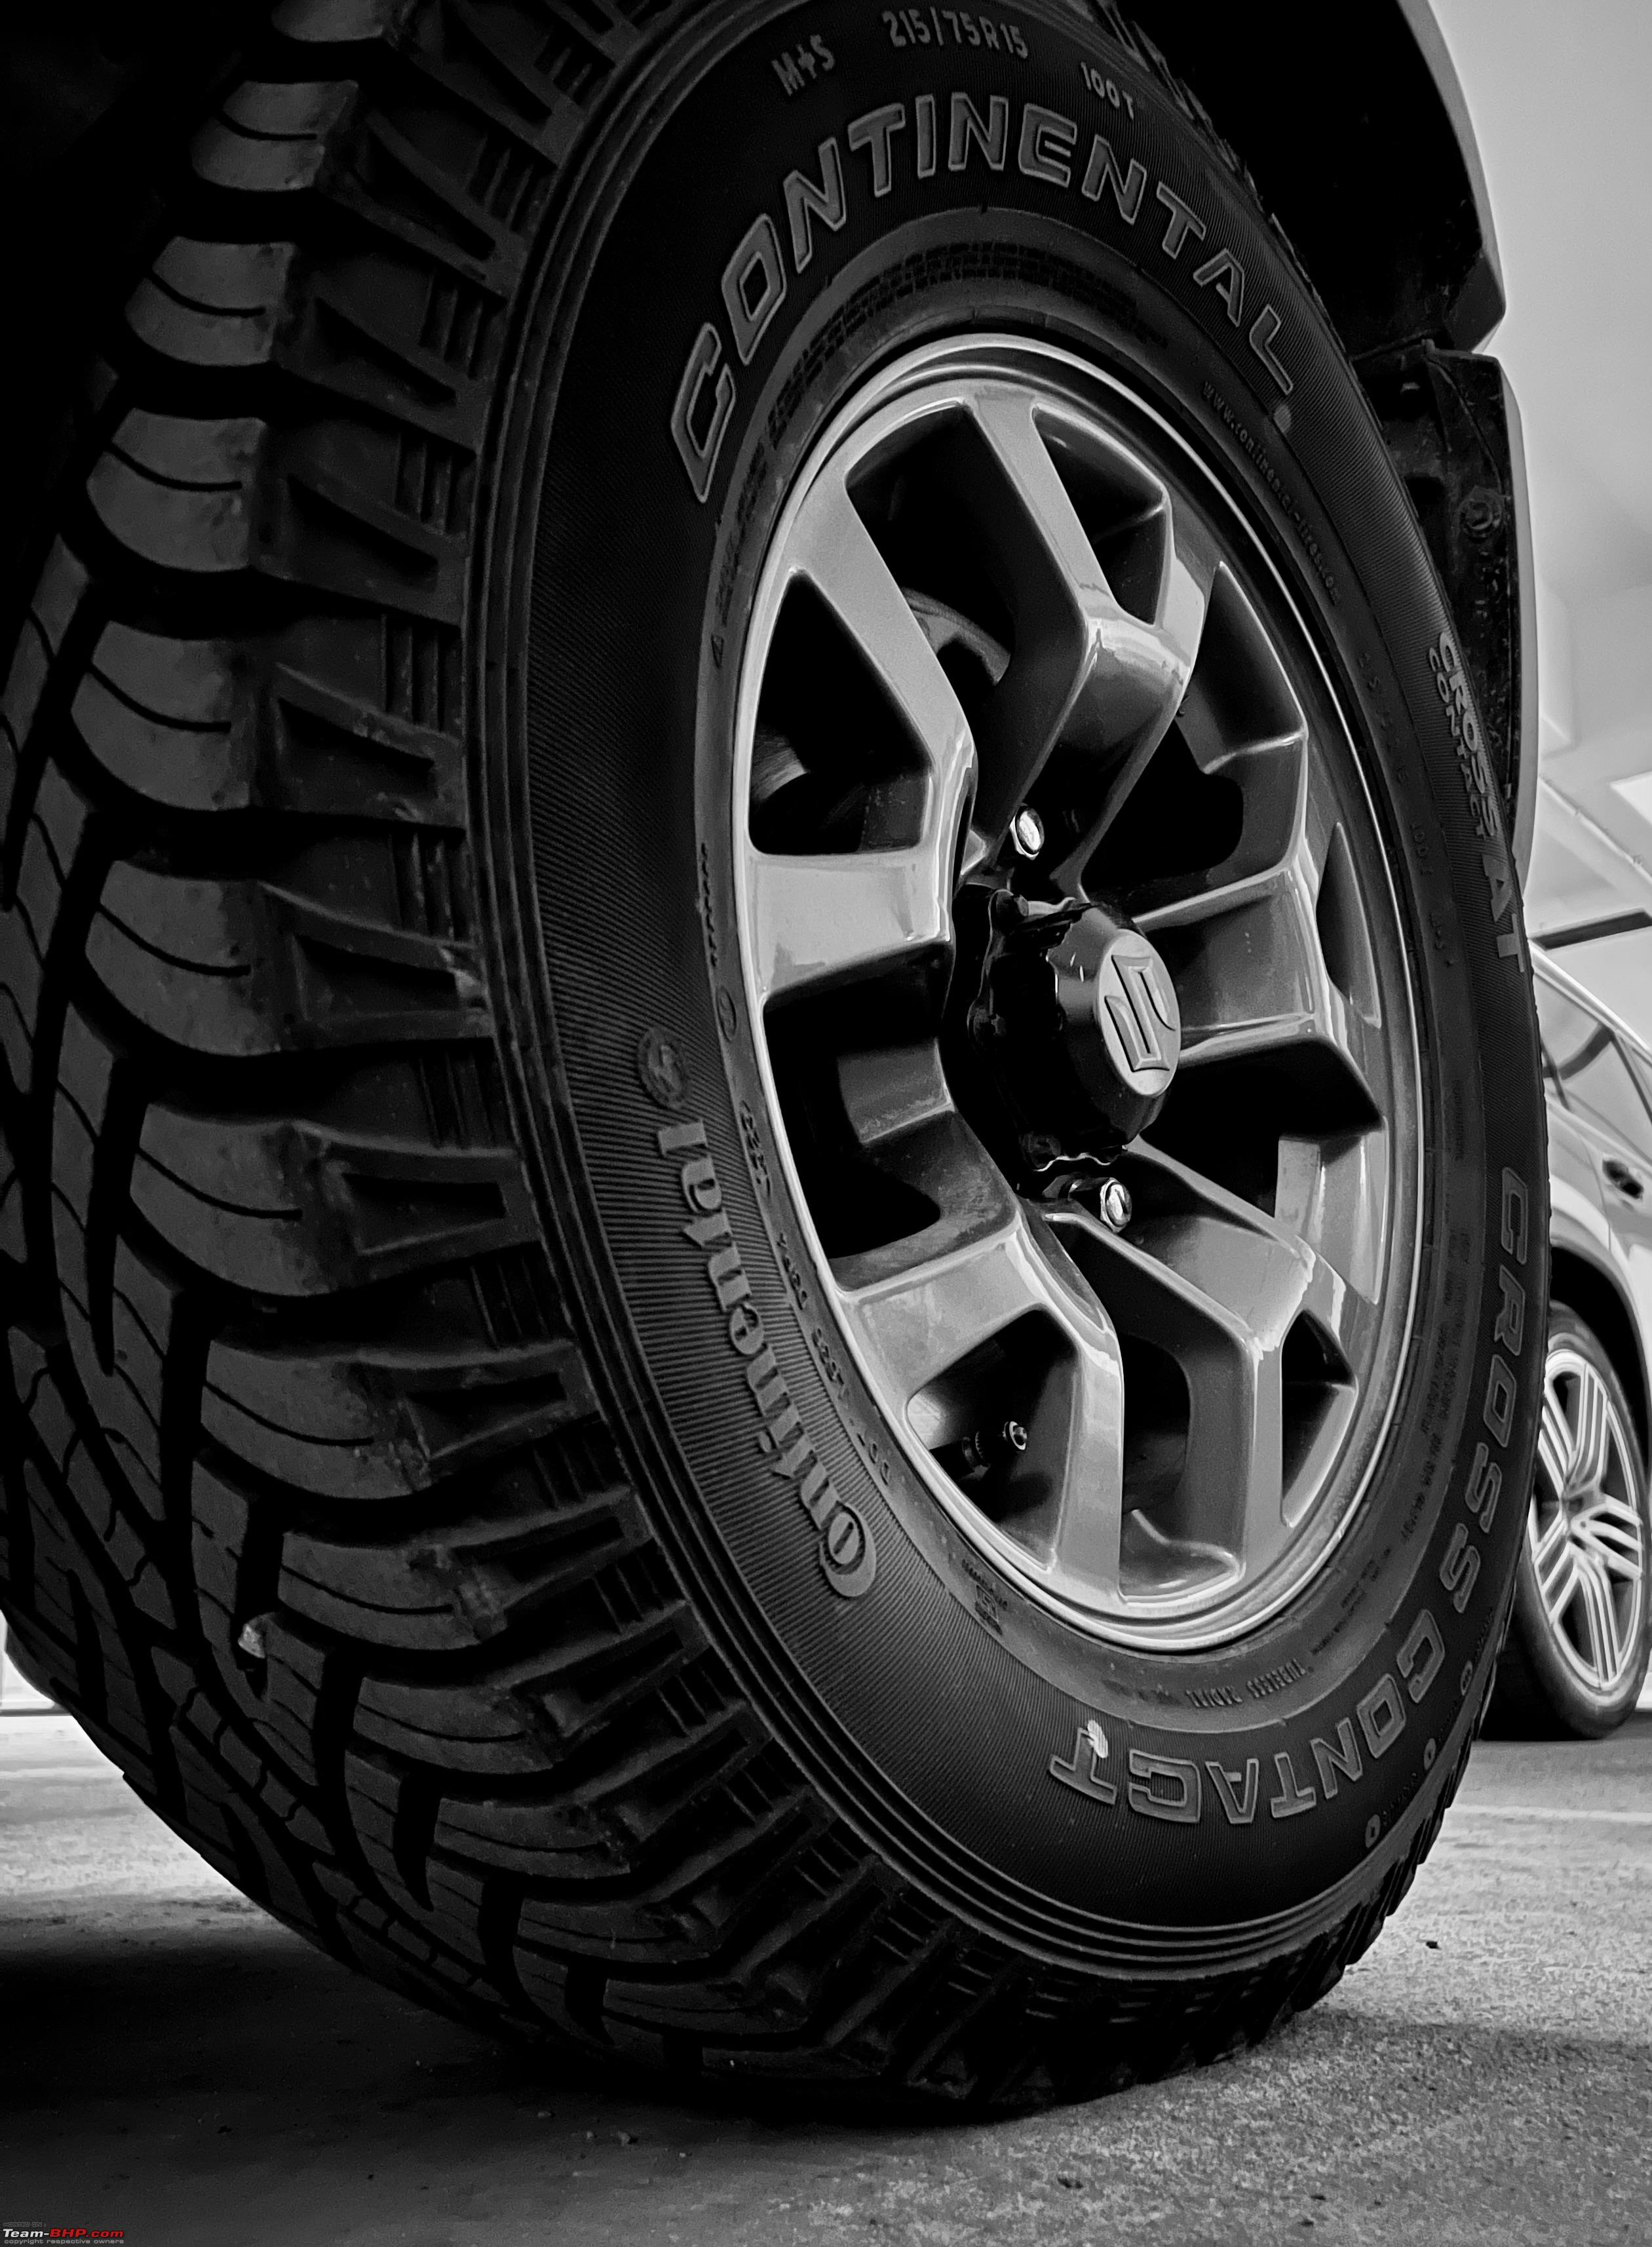 Maruti Suzuki Jimny : Tyre & wheel upgrade thread - Page 5 - Team-BHP